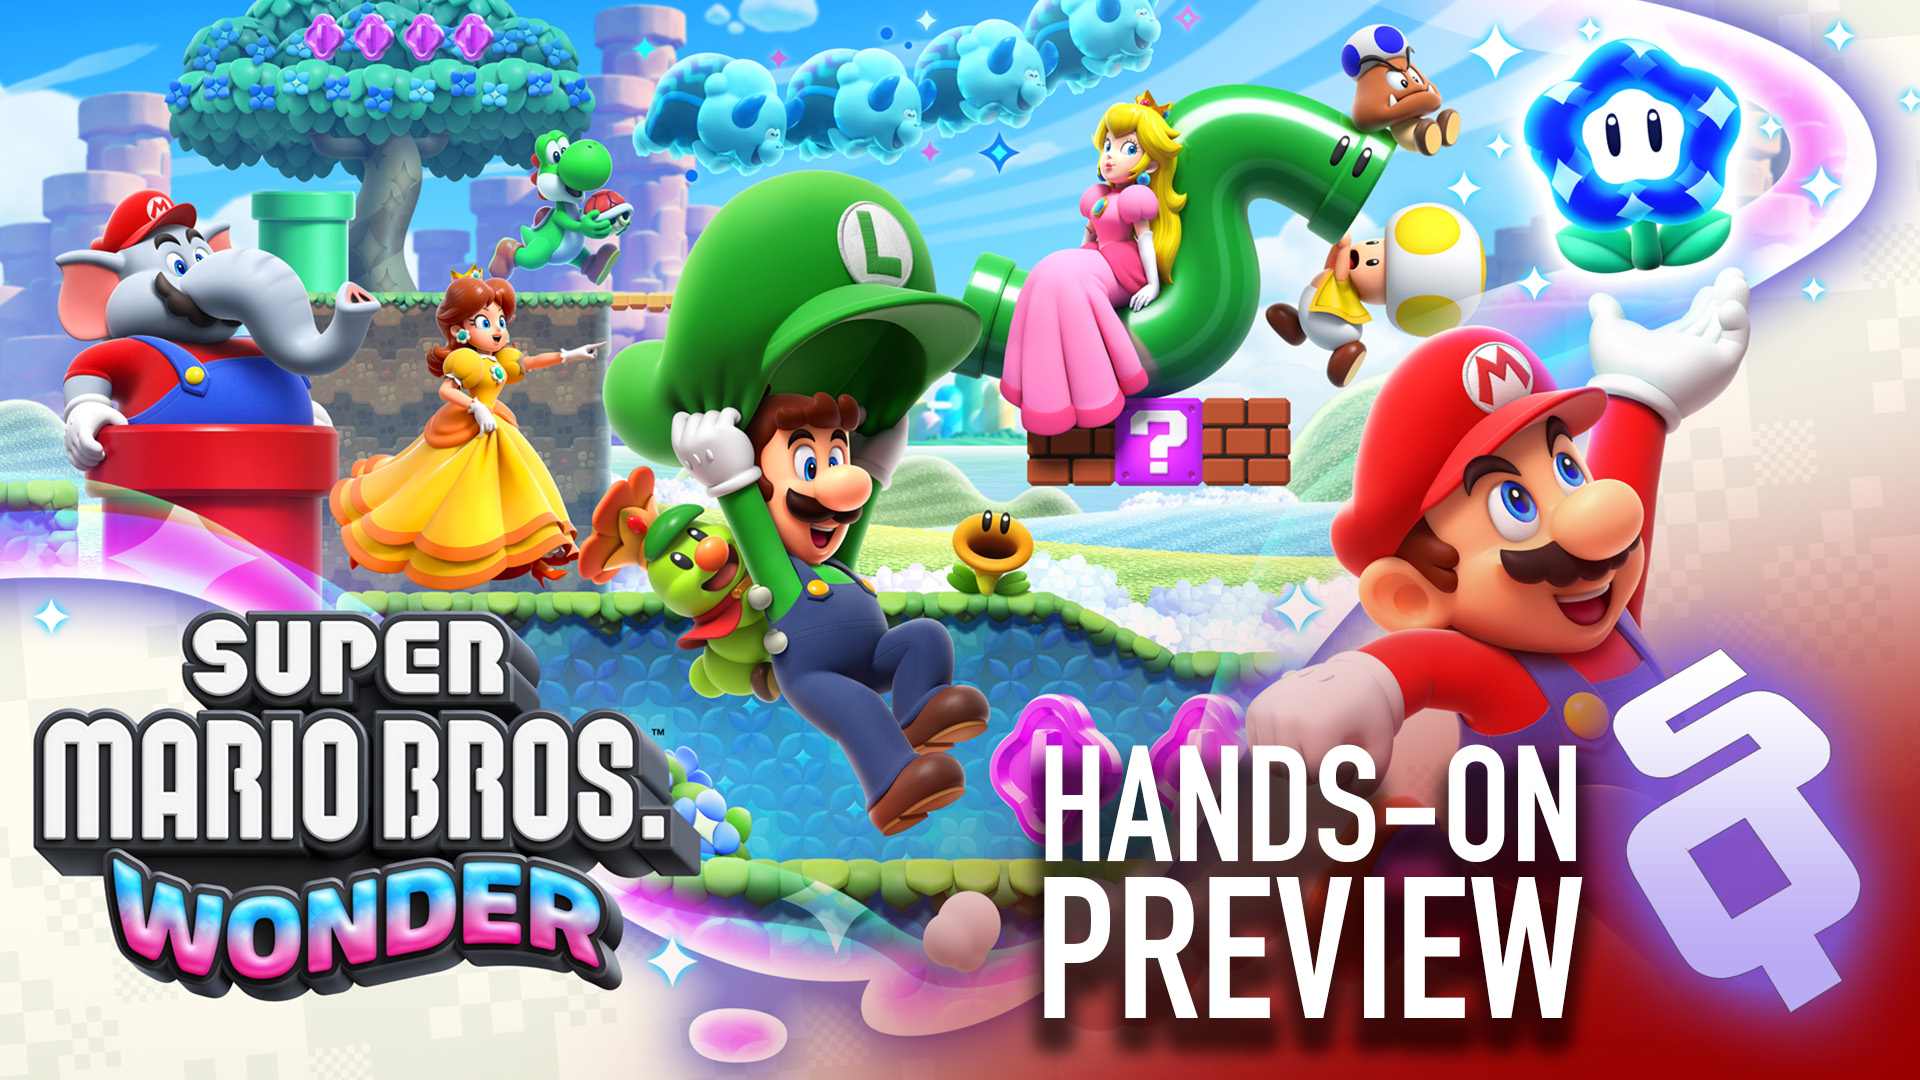 Super Mario Bros Wonder hands-on preview